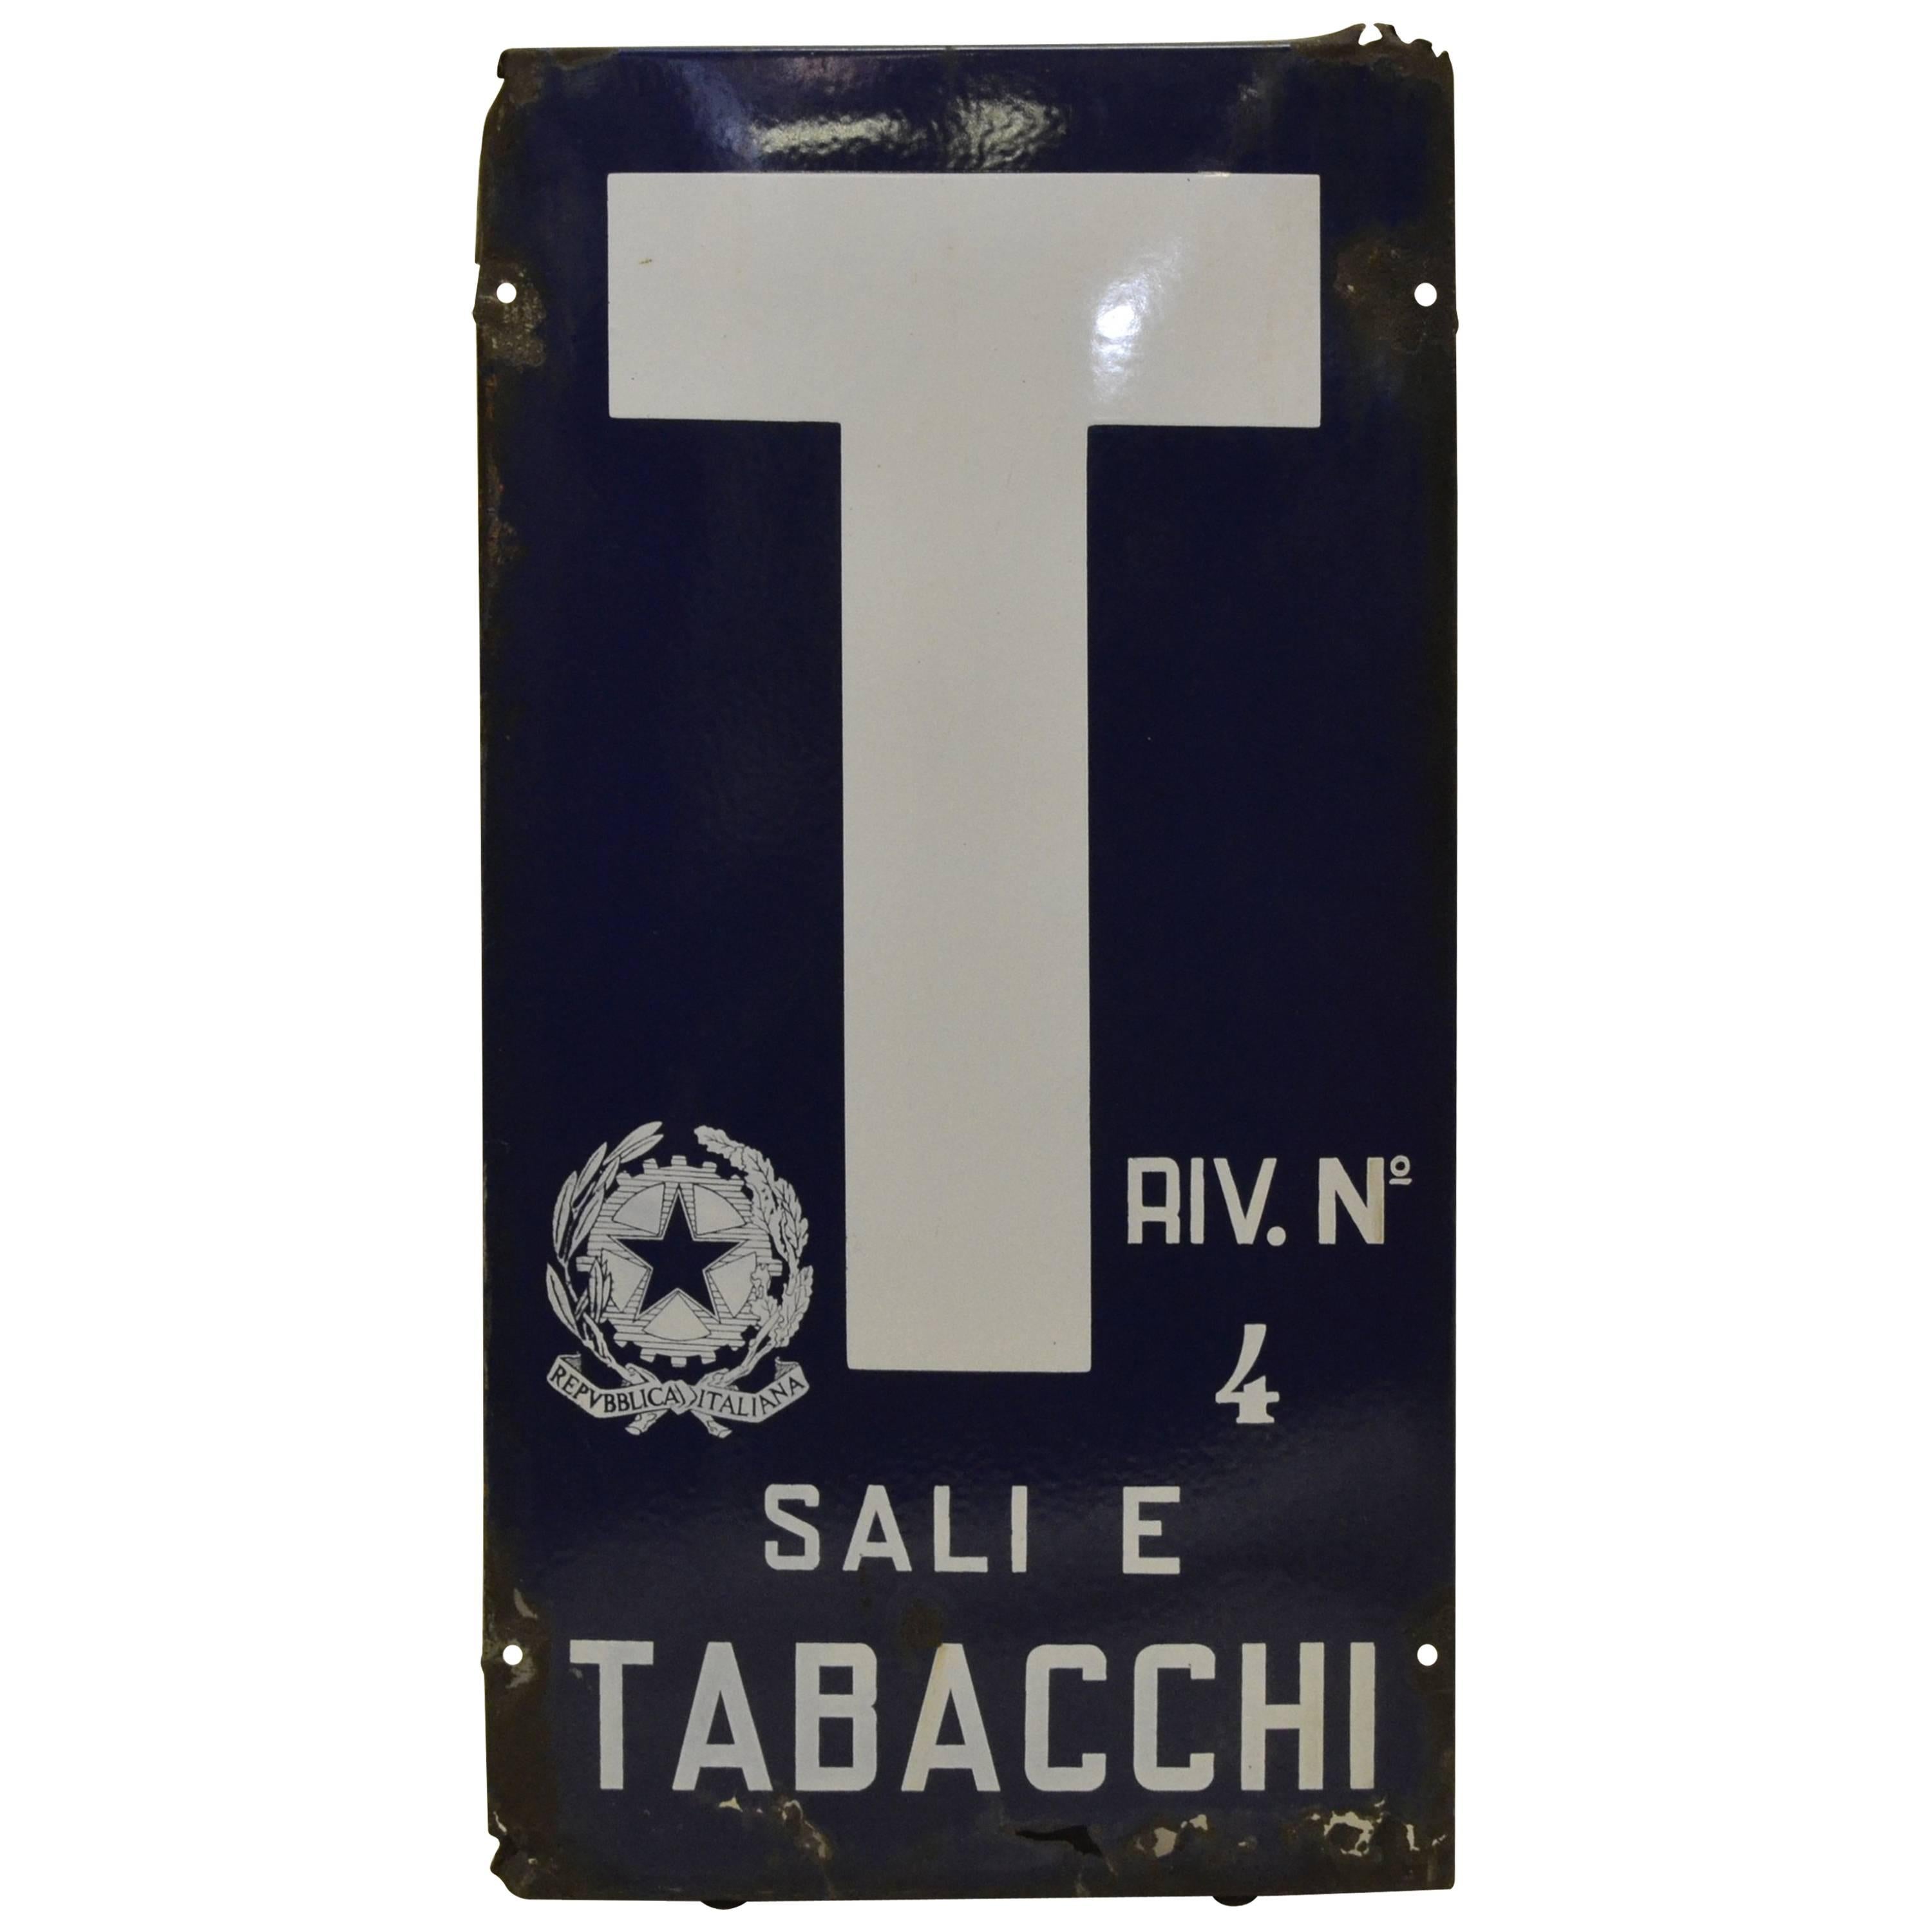 1960s Blue and White Italian Vintage Enamel Tobacco Sign ‘Sali e Tabacchi’